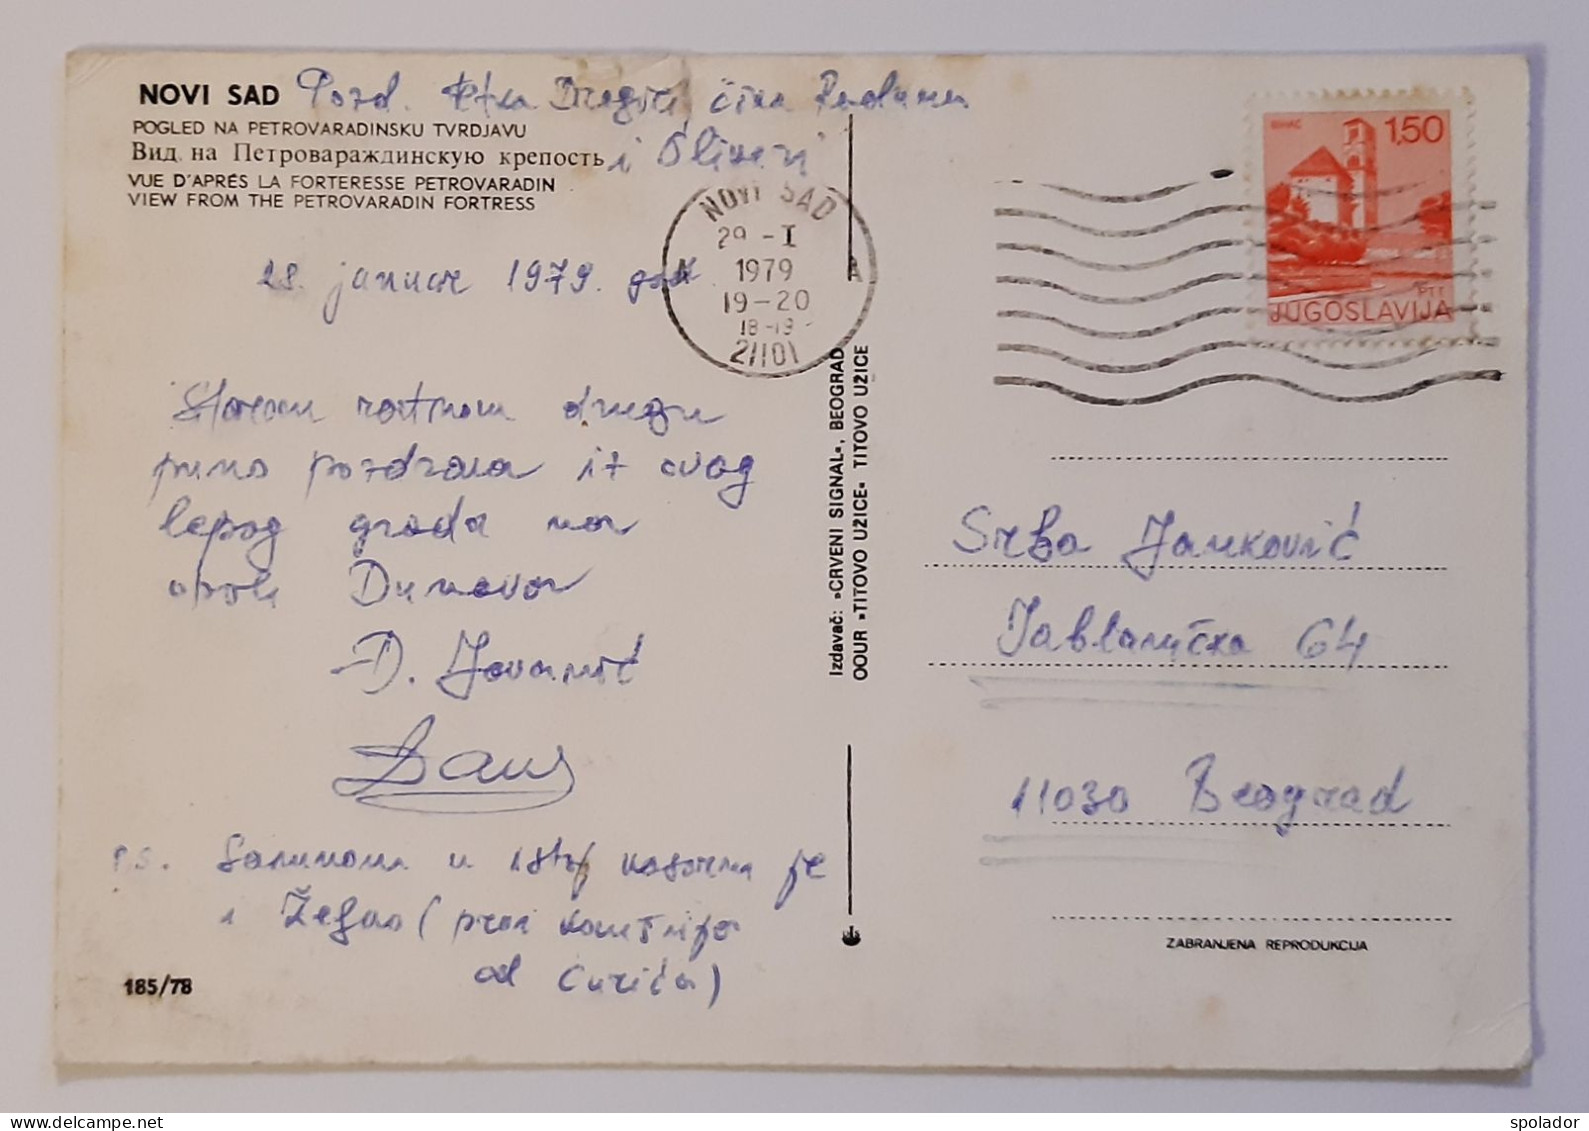 NOVI SAD-Ex-Yugoslavia-Vintage Postcard-Serbia-View From The Petrovaradin Fortress-1979-used With Stamp - Yugoslavia